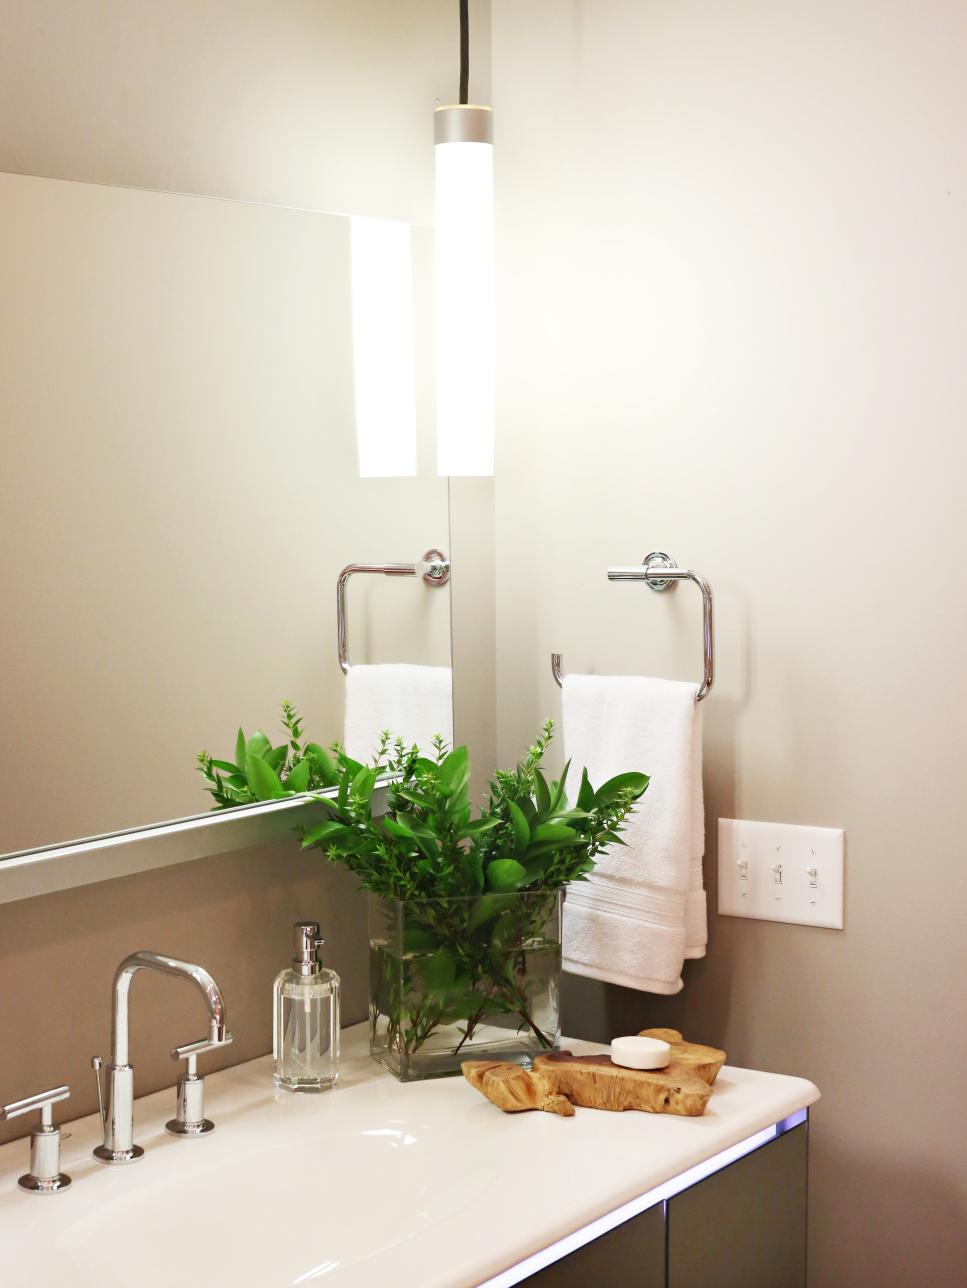 Modern, Neutral Bathroom Vanity With Pendant Lighting